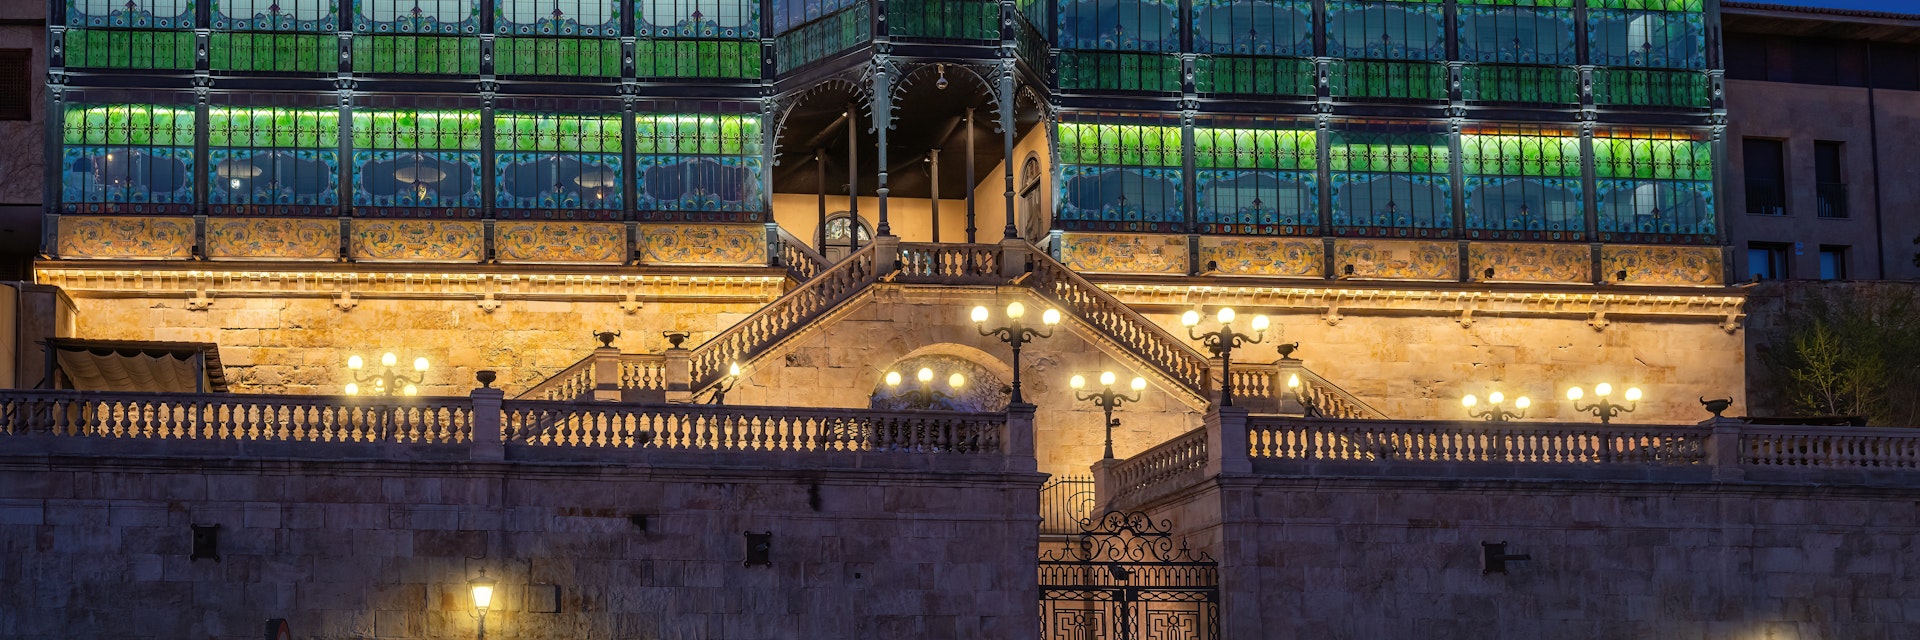 Casa Lis at night - Art Nouveau and Art Deco Museum - Salamanca, Spain.